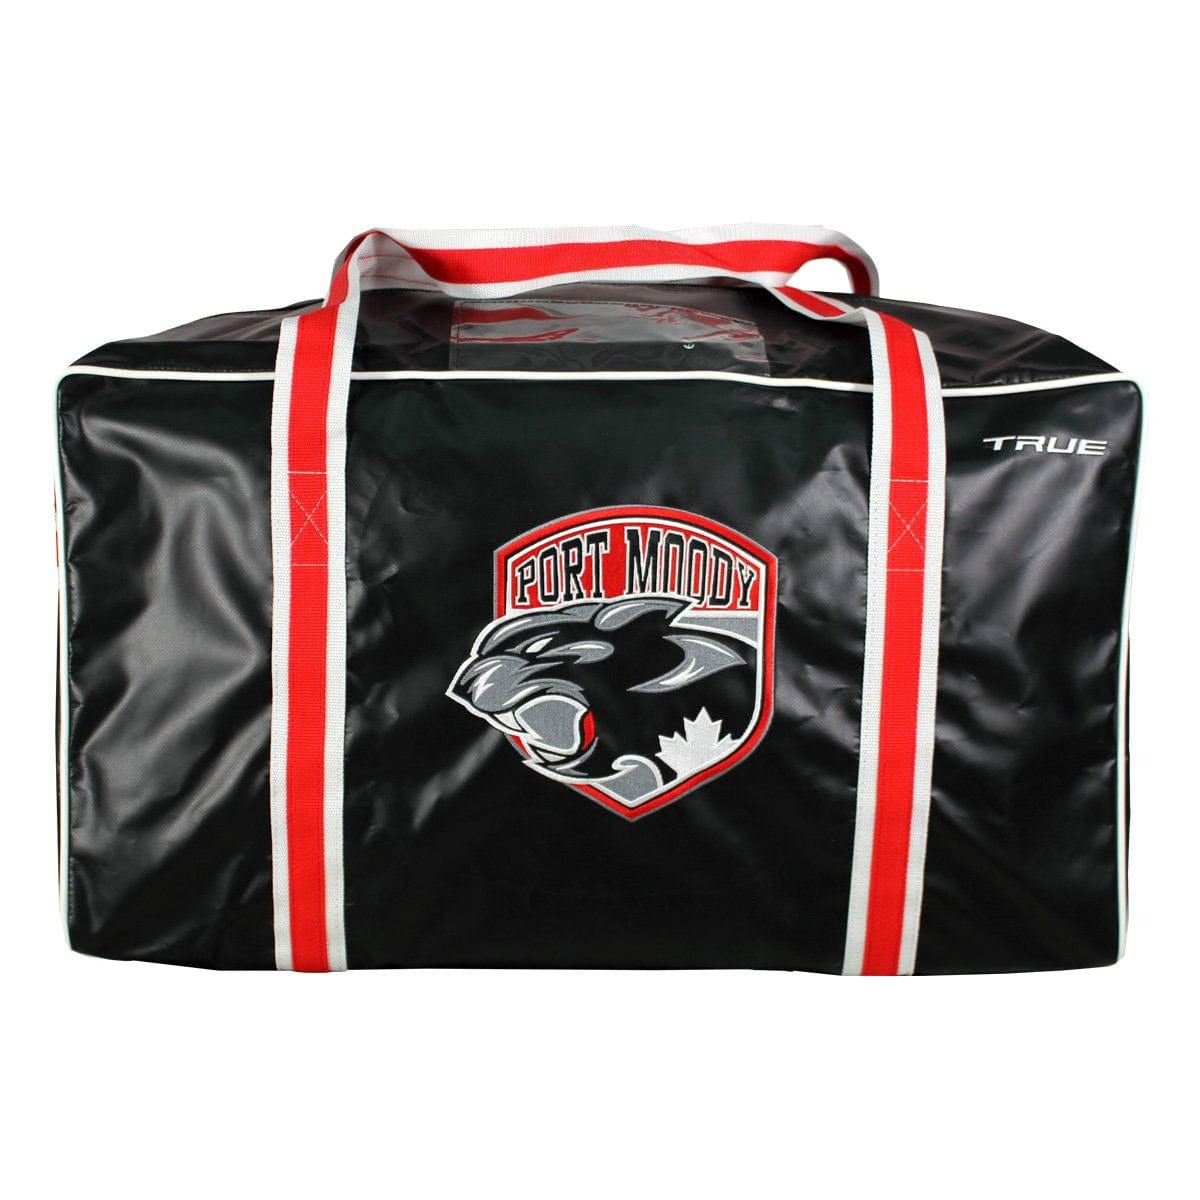 TRUE Team Custom Pro Carry Hockey Bag - Port Moody Panthers